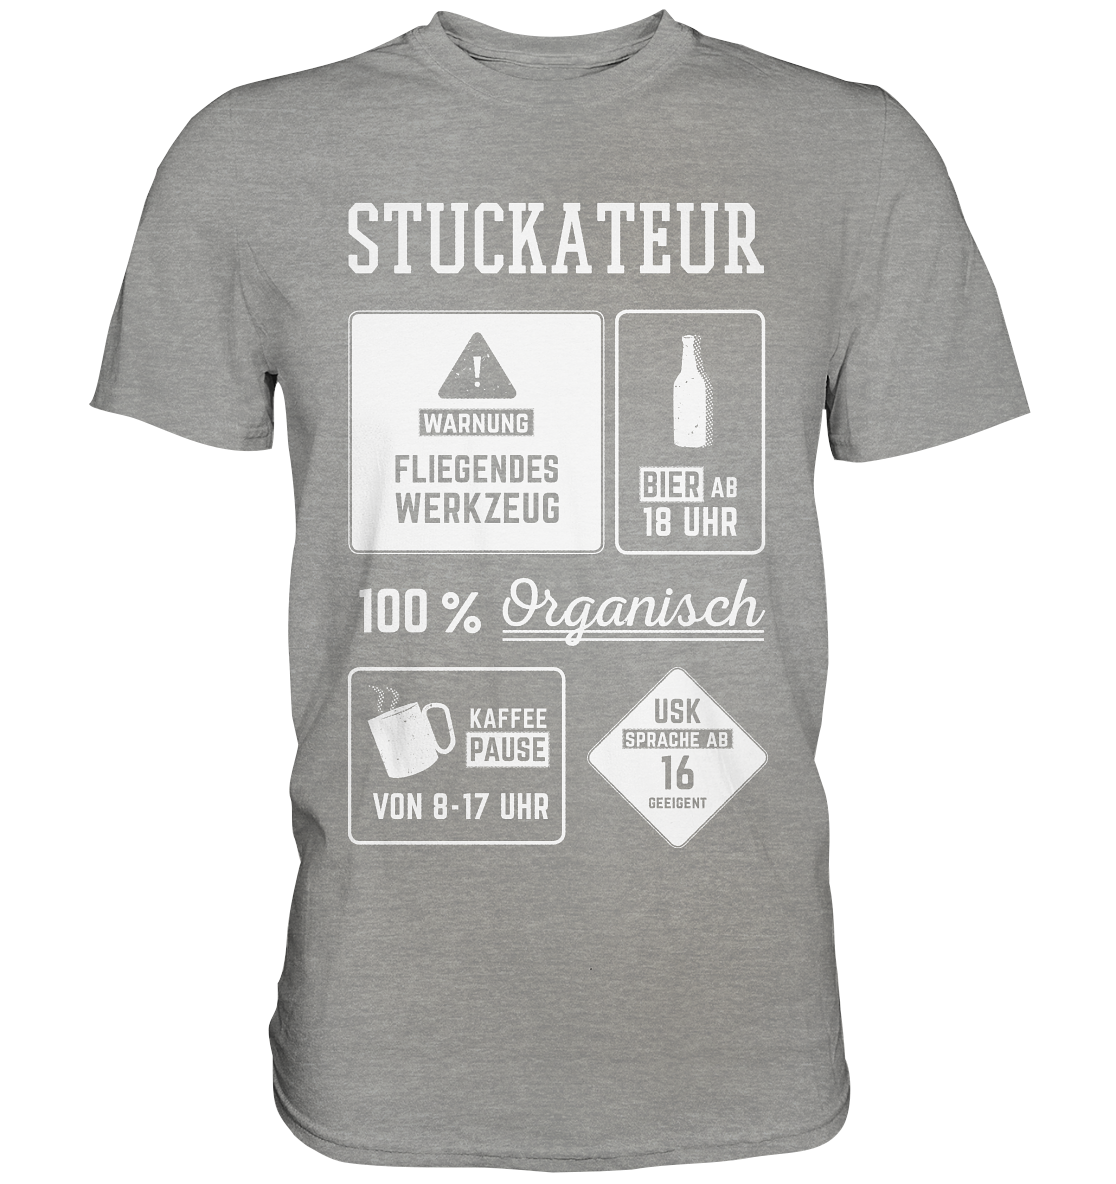 Stuckateur Warnung / Druck weiß / Männer Premium Shirt - Baufun Shop